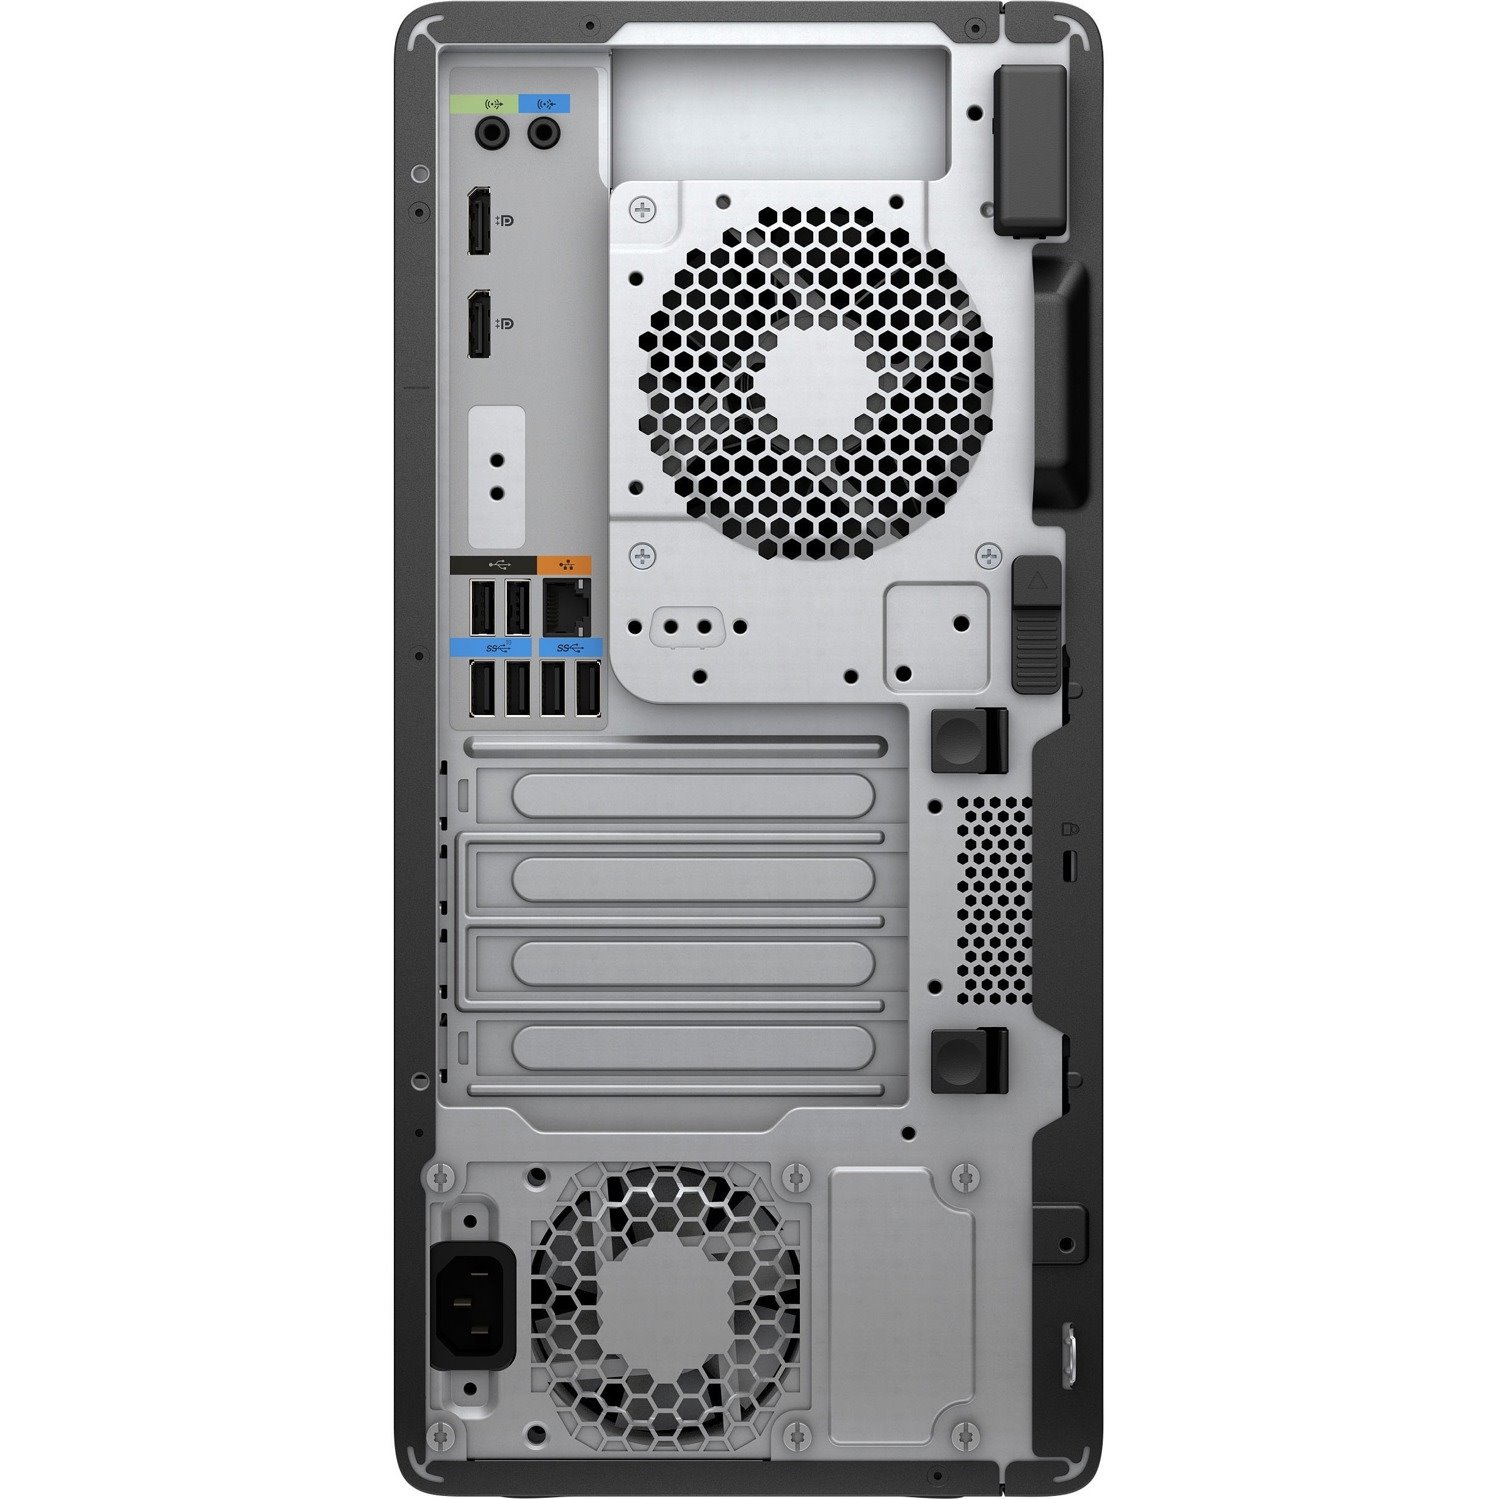 HP Z2 G5 Workstation - 1 x Intel Core i9 10th Gen i9-10900K - 32 GB - 512 GB SSD - Tower - Black